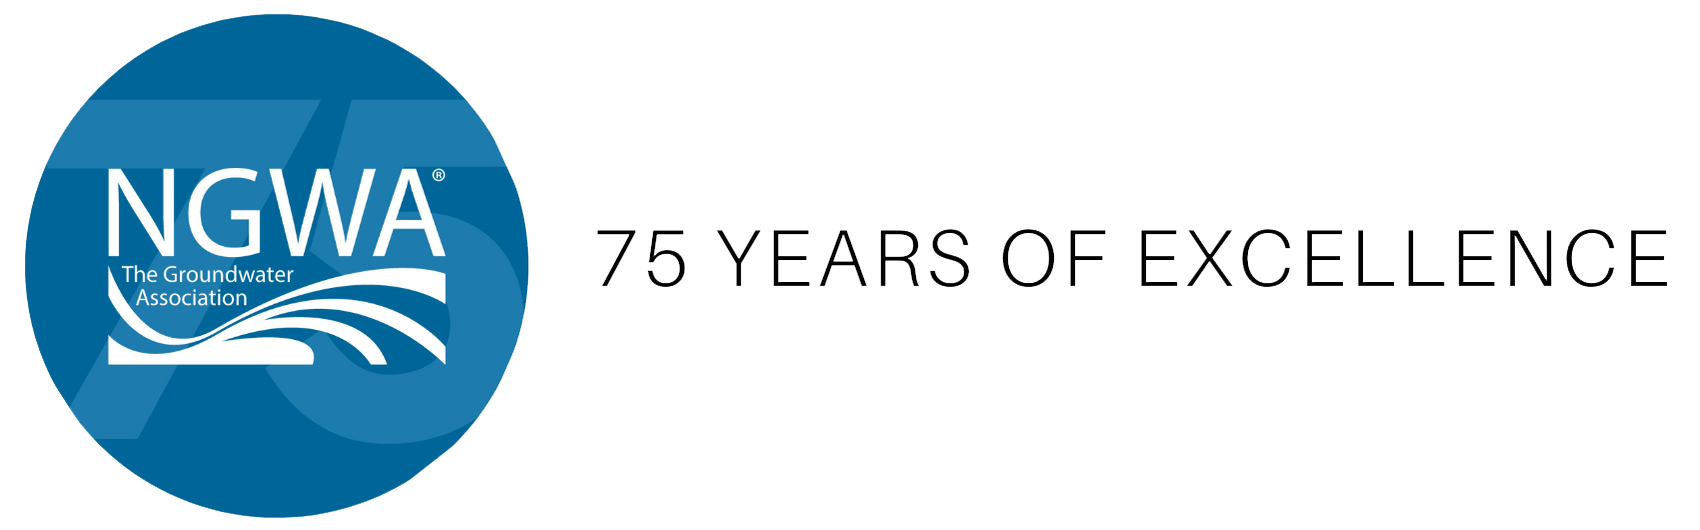 75 year logo ngwa